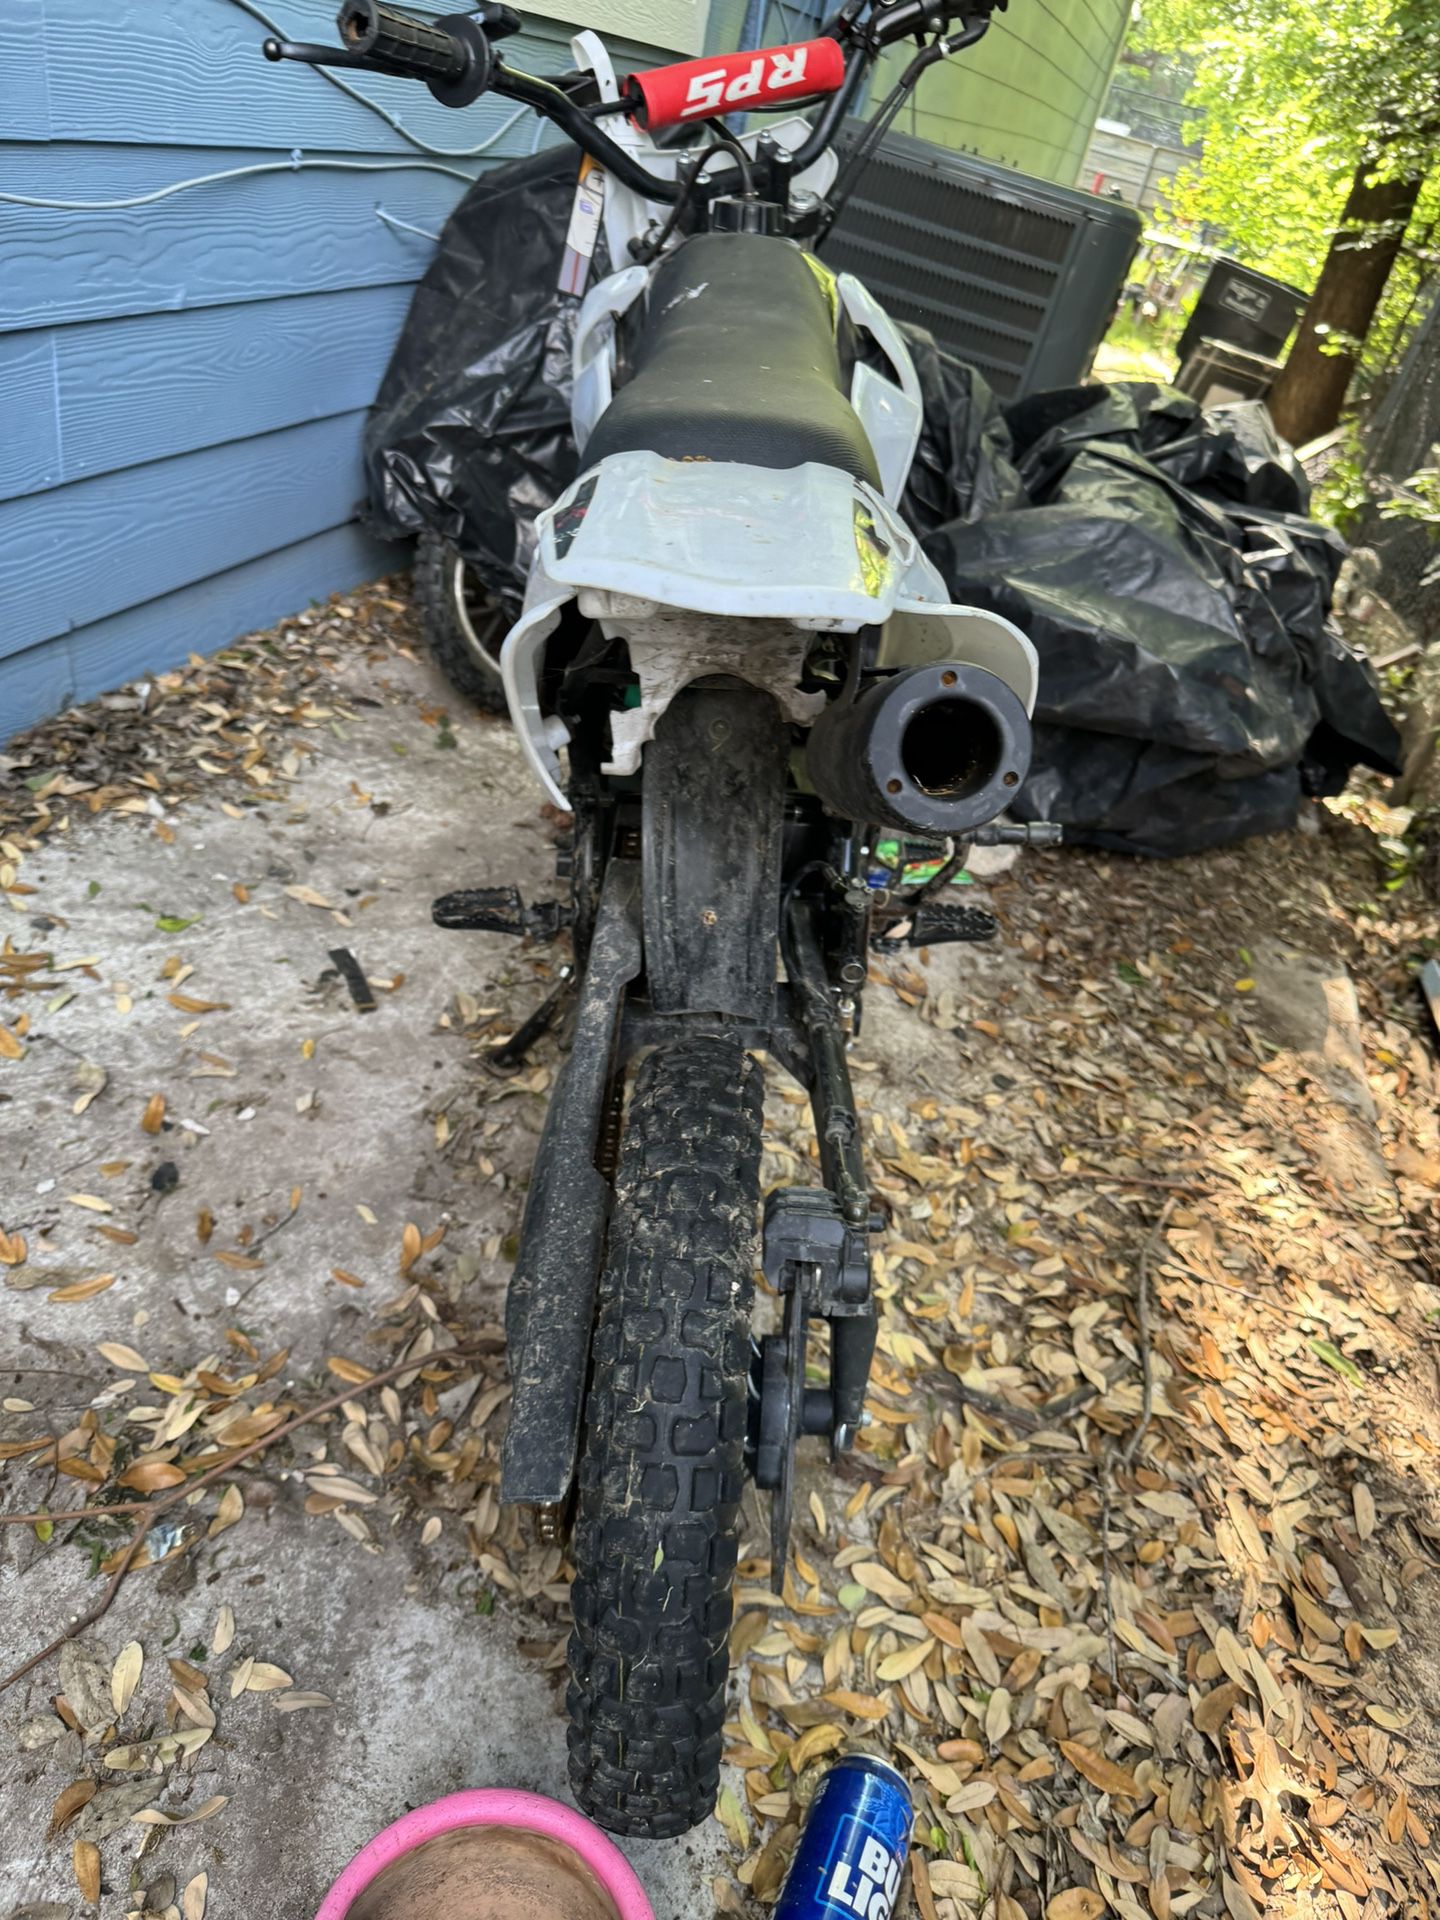 125cc Dirt bike (desc)